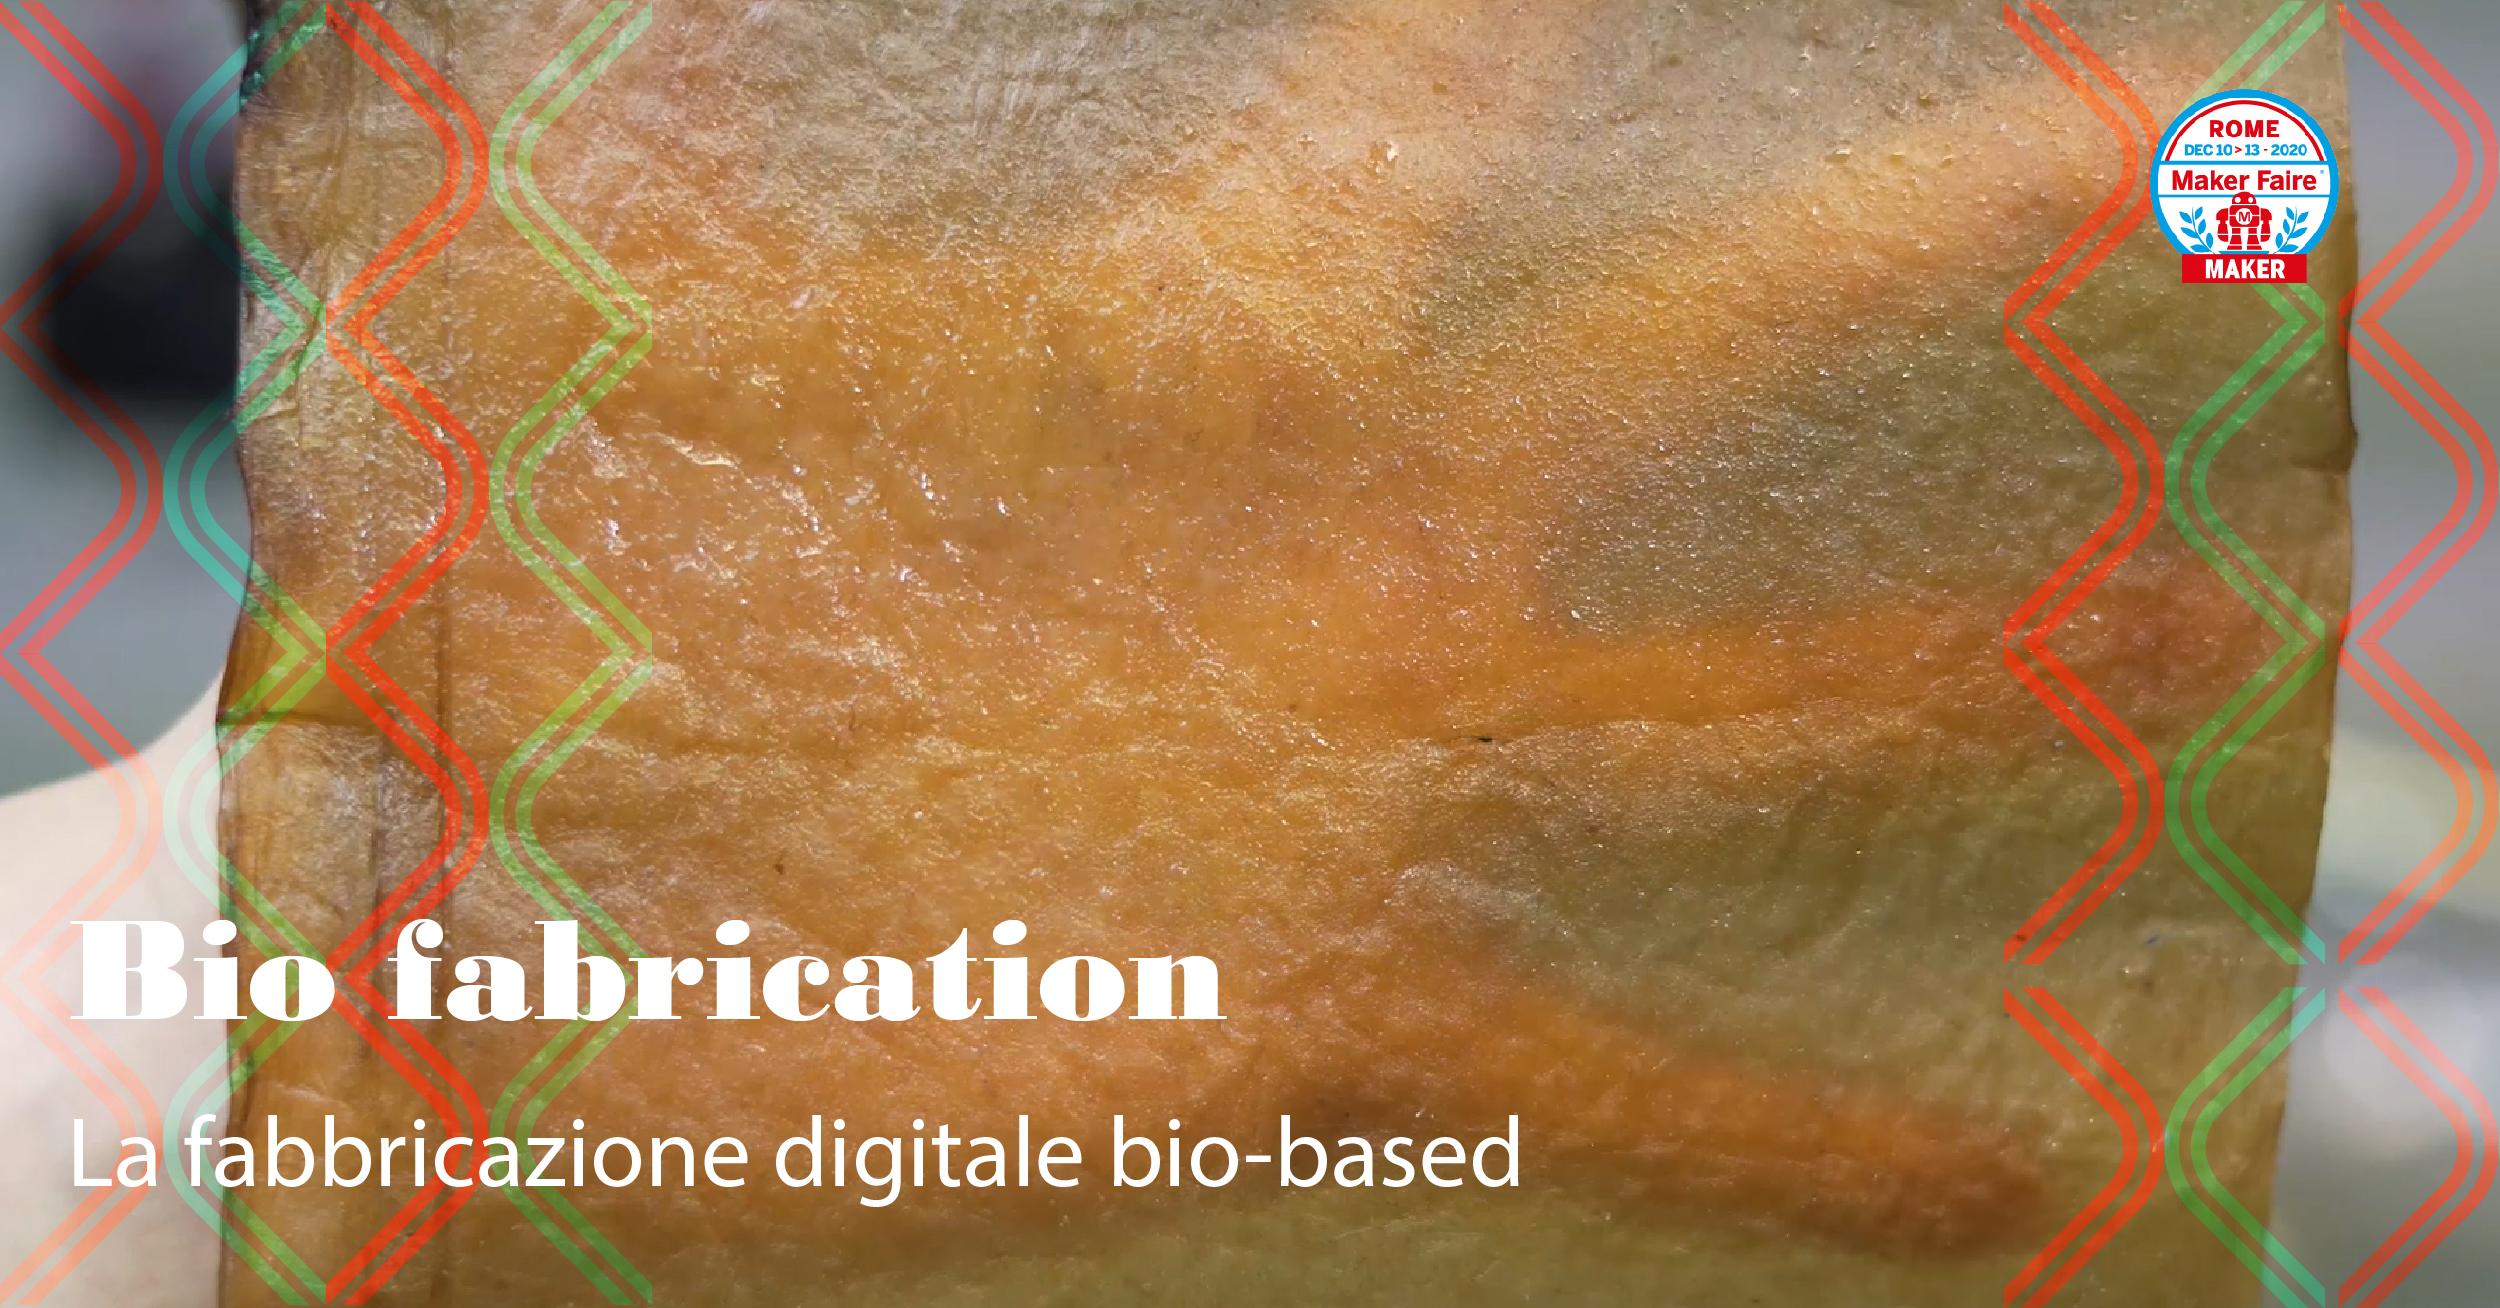 BIO fabrication: bio-based digital manufacturing